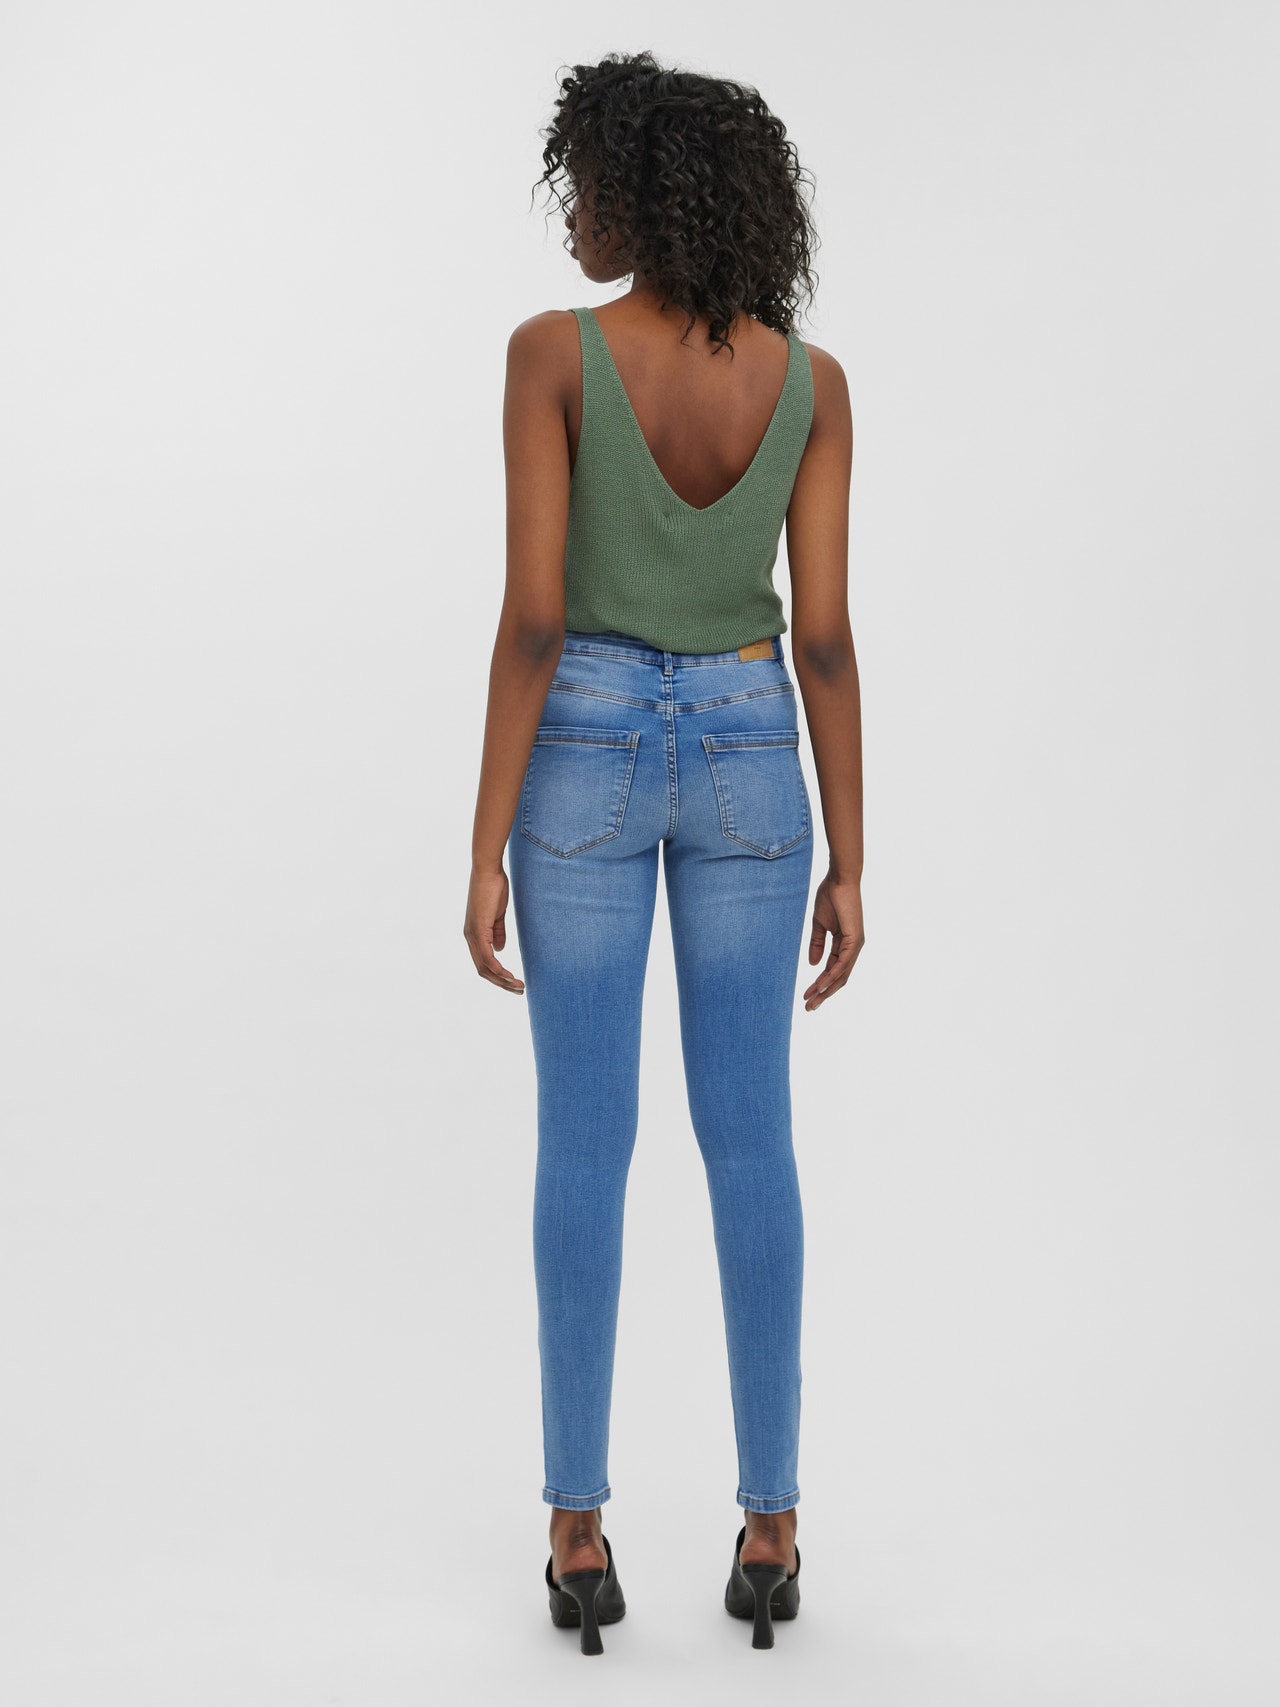 VMSOPHIA High rise Jeans 50% Moda® | Vero with discount